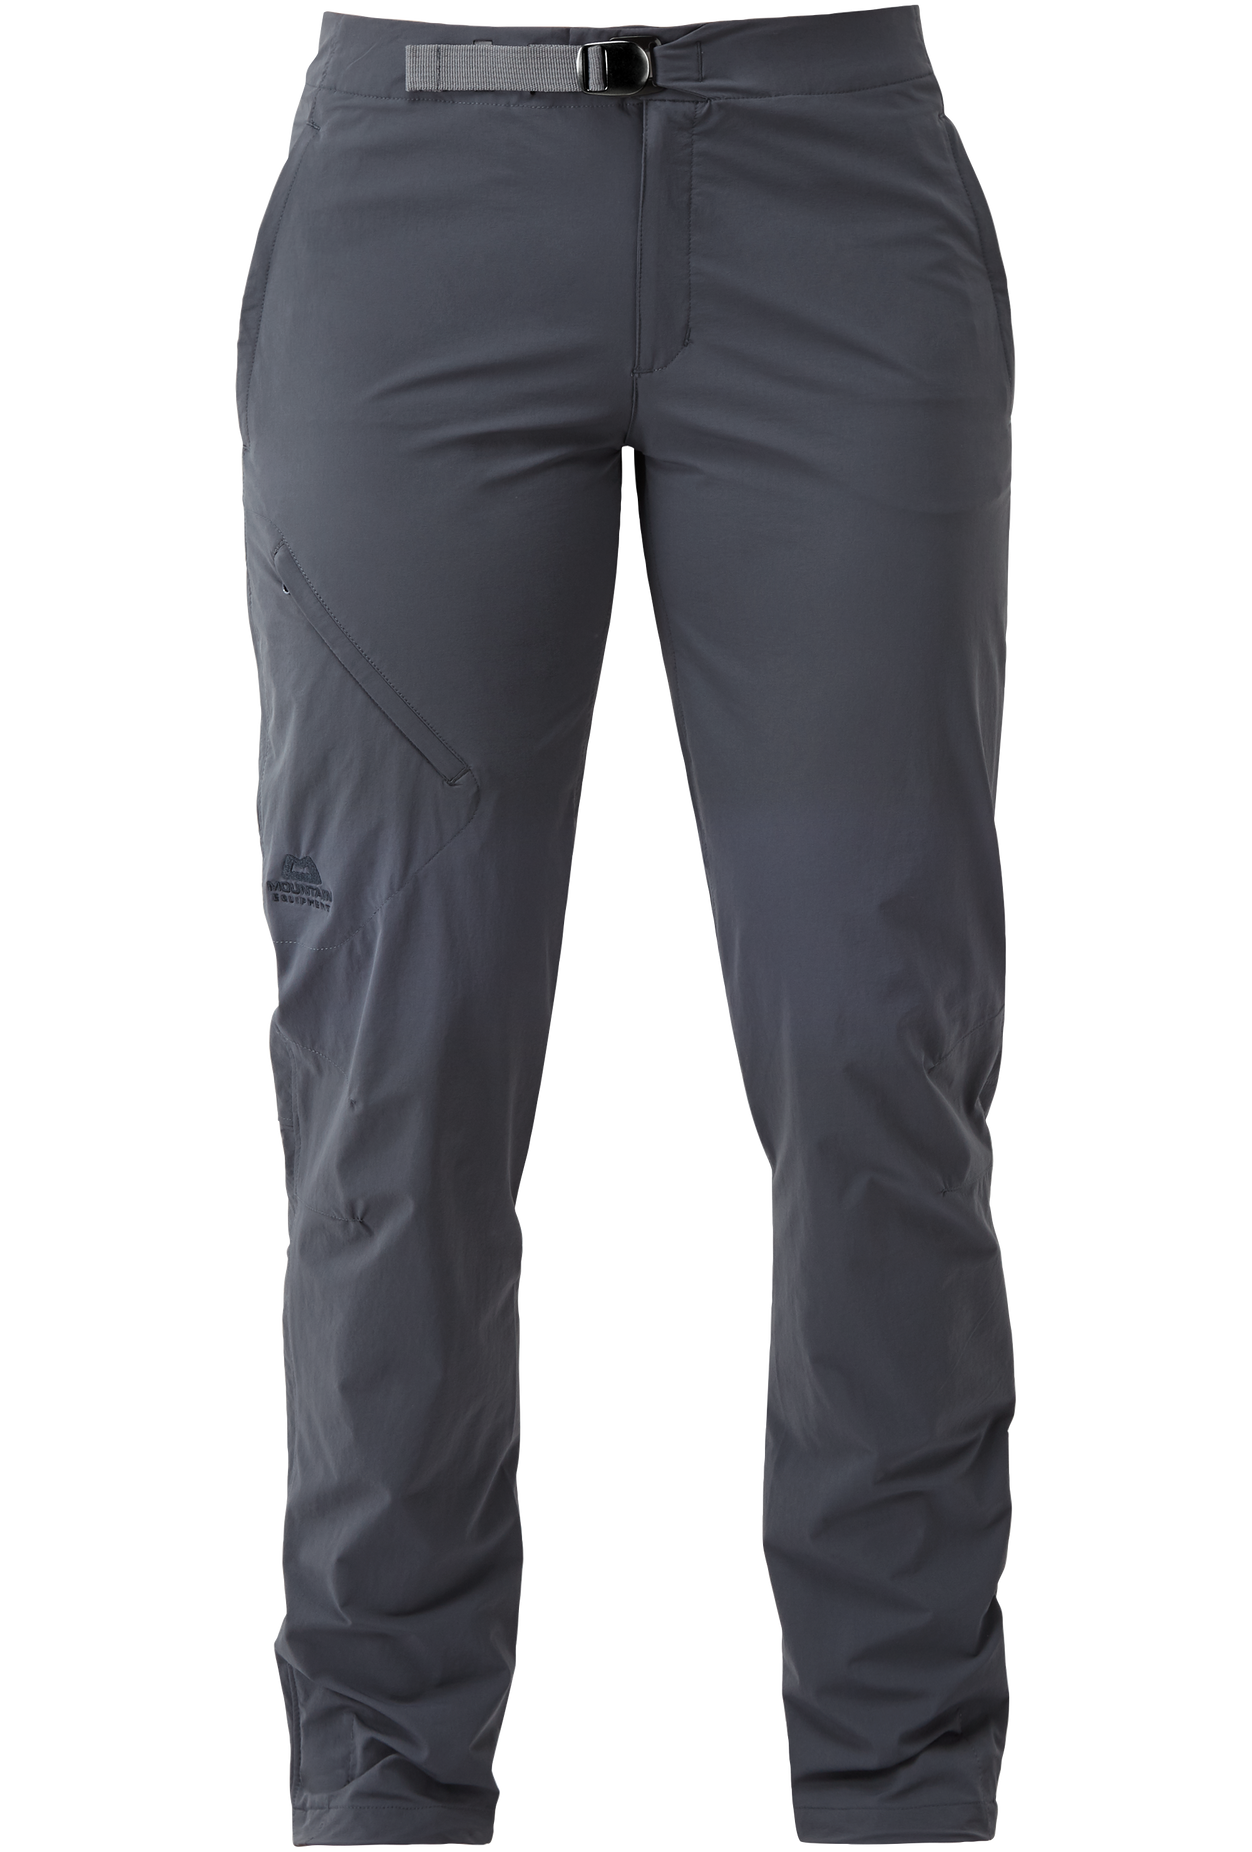 Mountain Equipment dámské softshellové kalhoty Comici Wmns Pant - zkrácené Barva: Ombre Blue, Velikost: 14/L